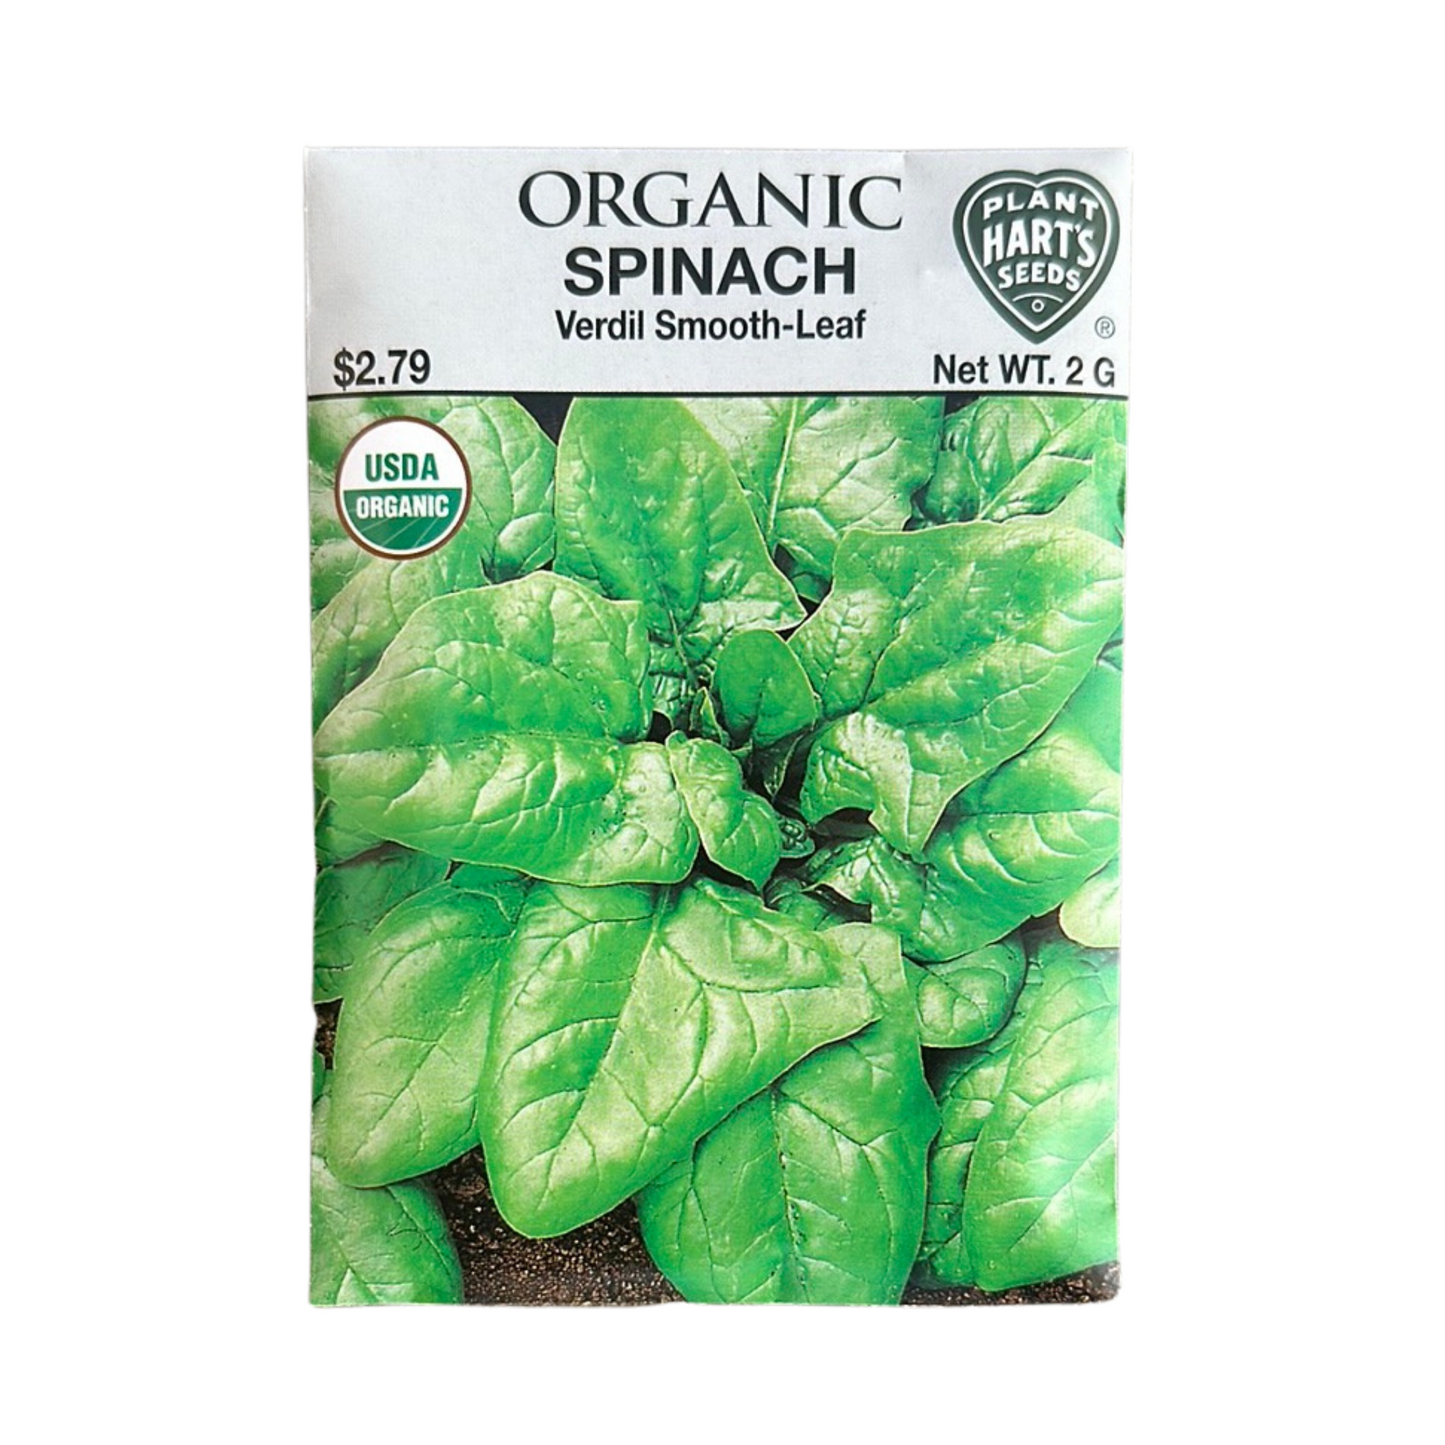 Organic Spinach Verdill